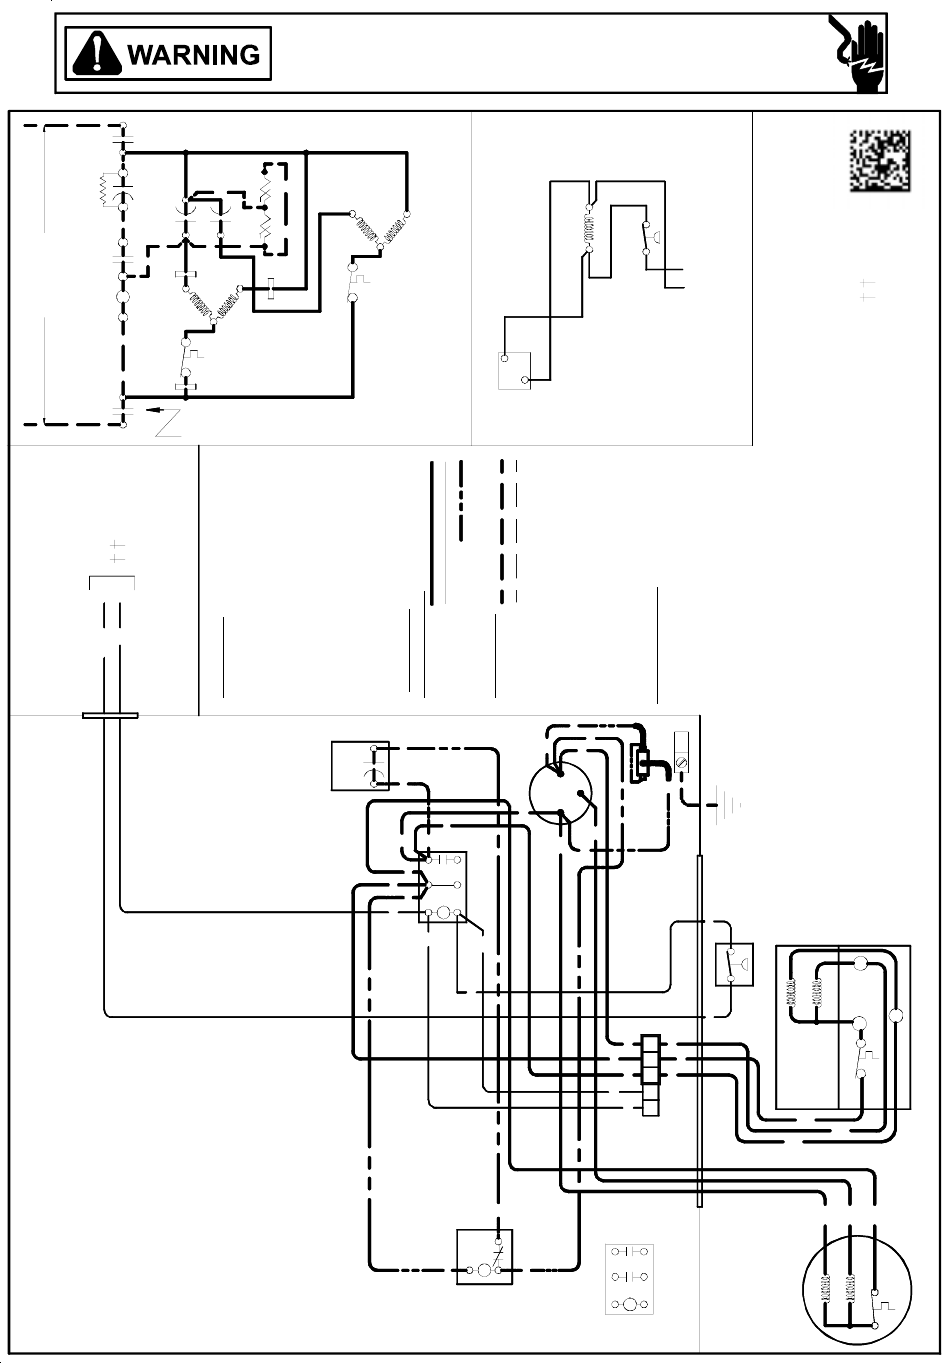 American Standard Furnace Wiring Diagrams